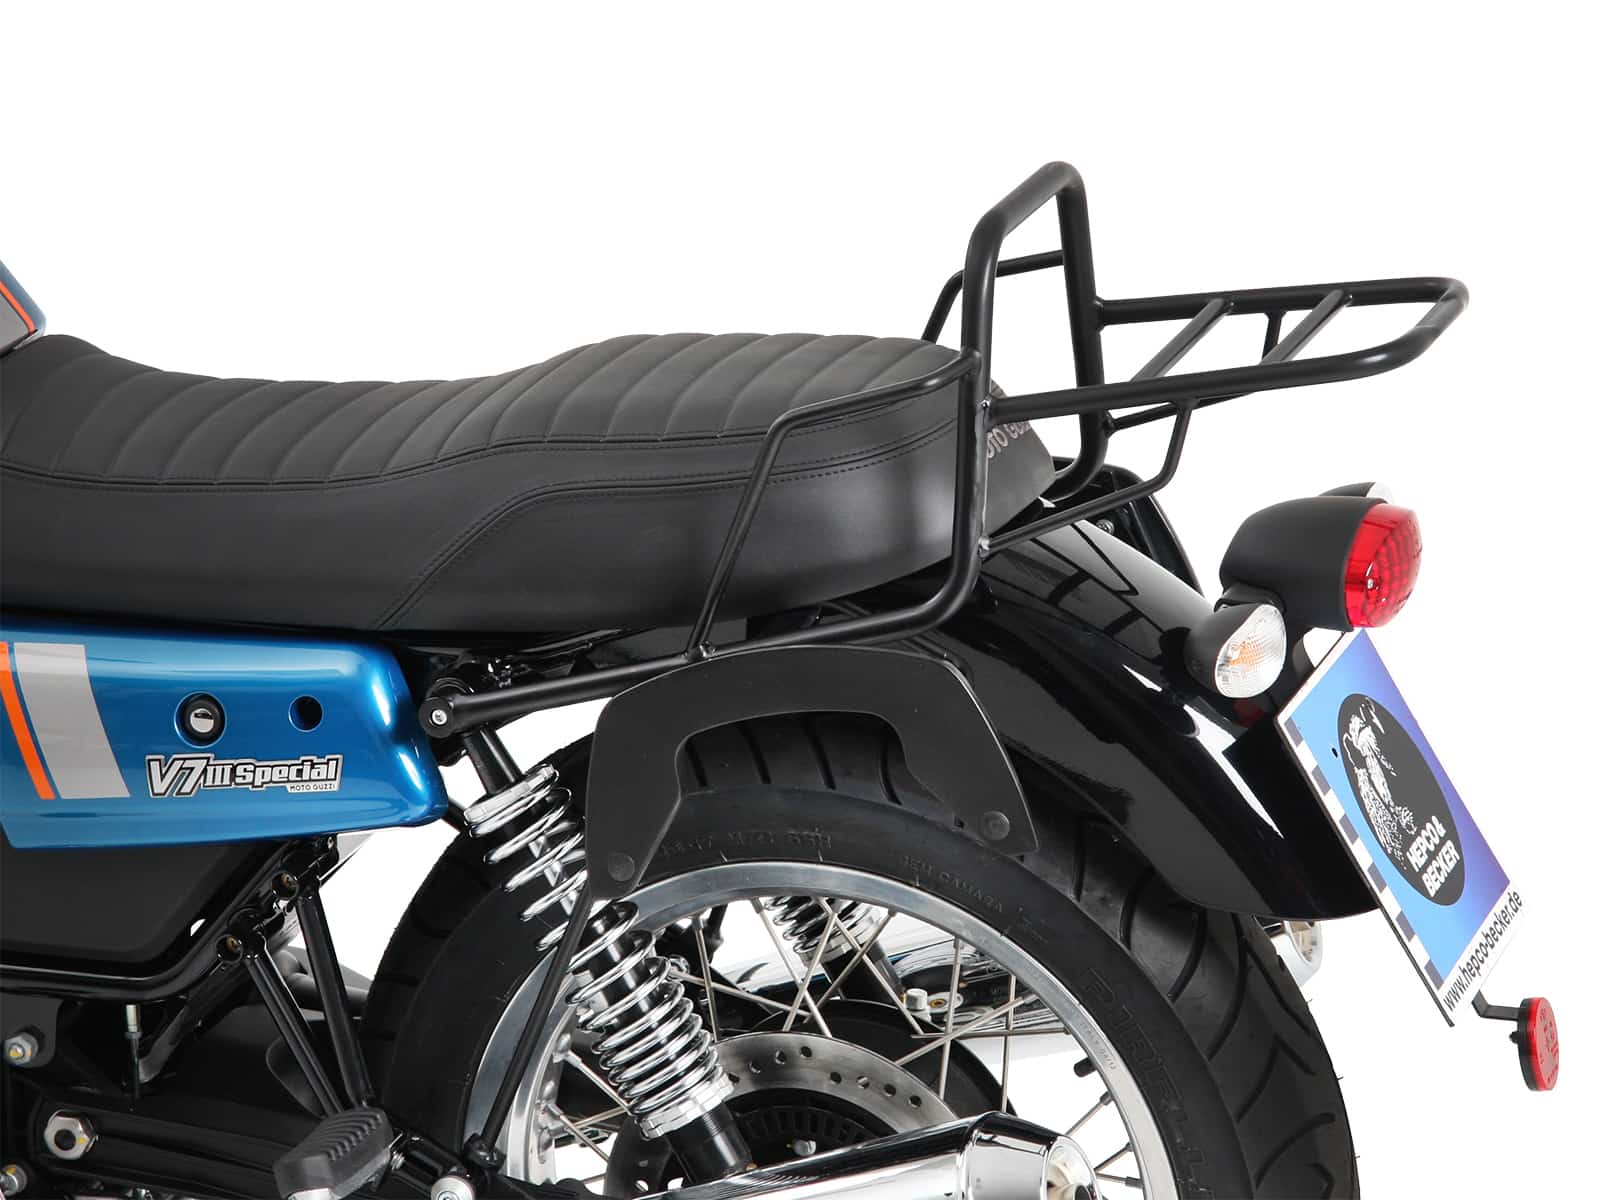 C-Bow sidecarrier chrome for Moto Guzzi V7 III (Stone